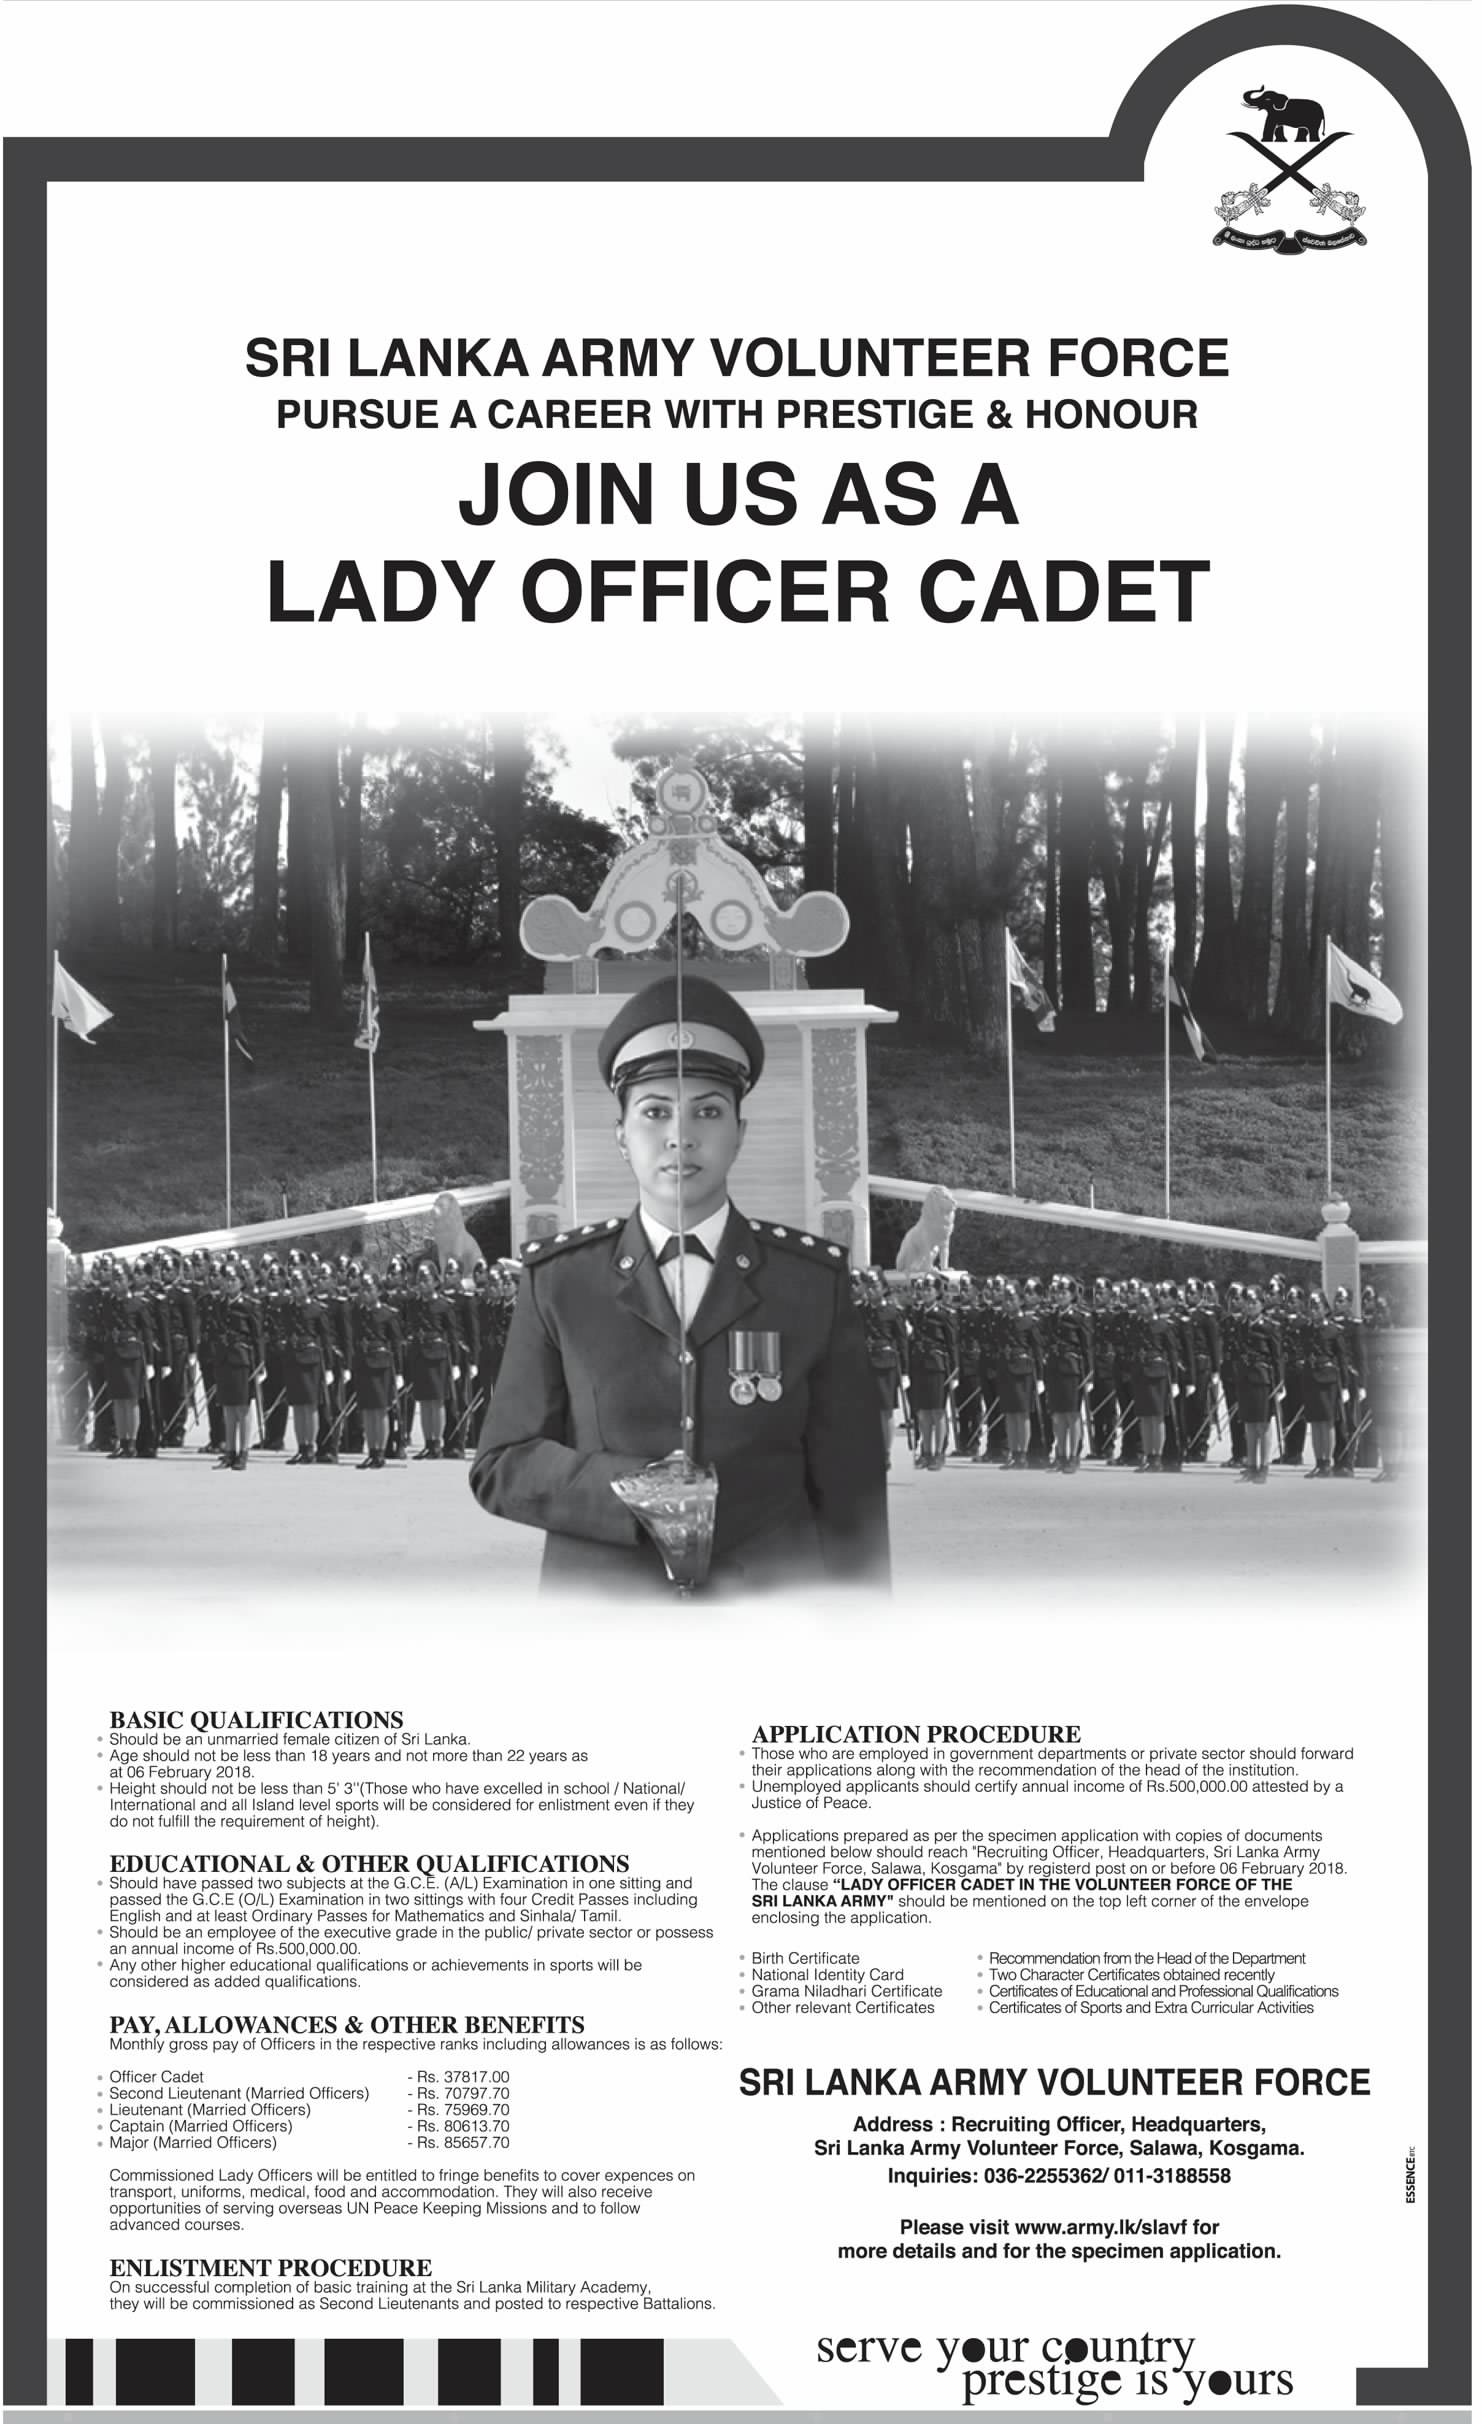 Lady Officer Cadet - Sri Lanka Army Volunteer Force